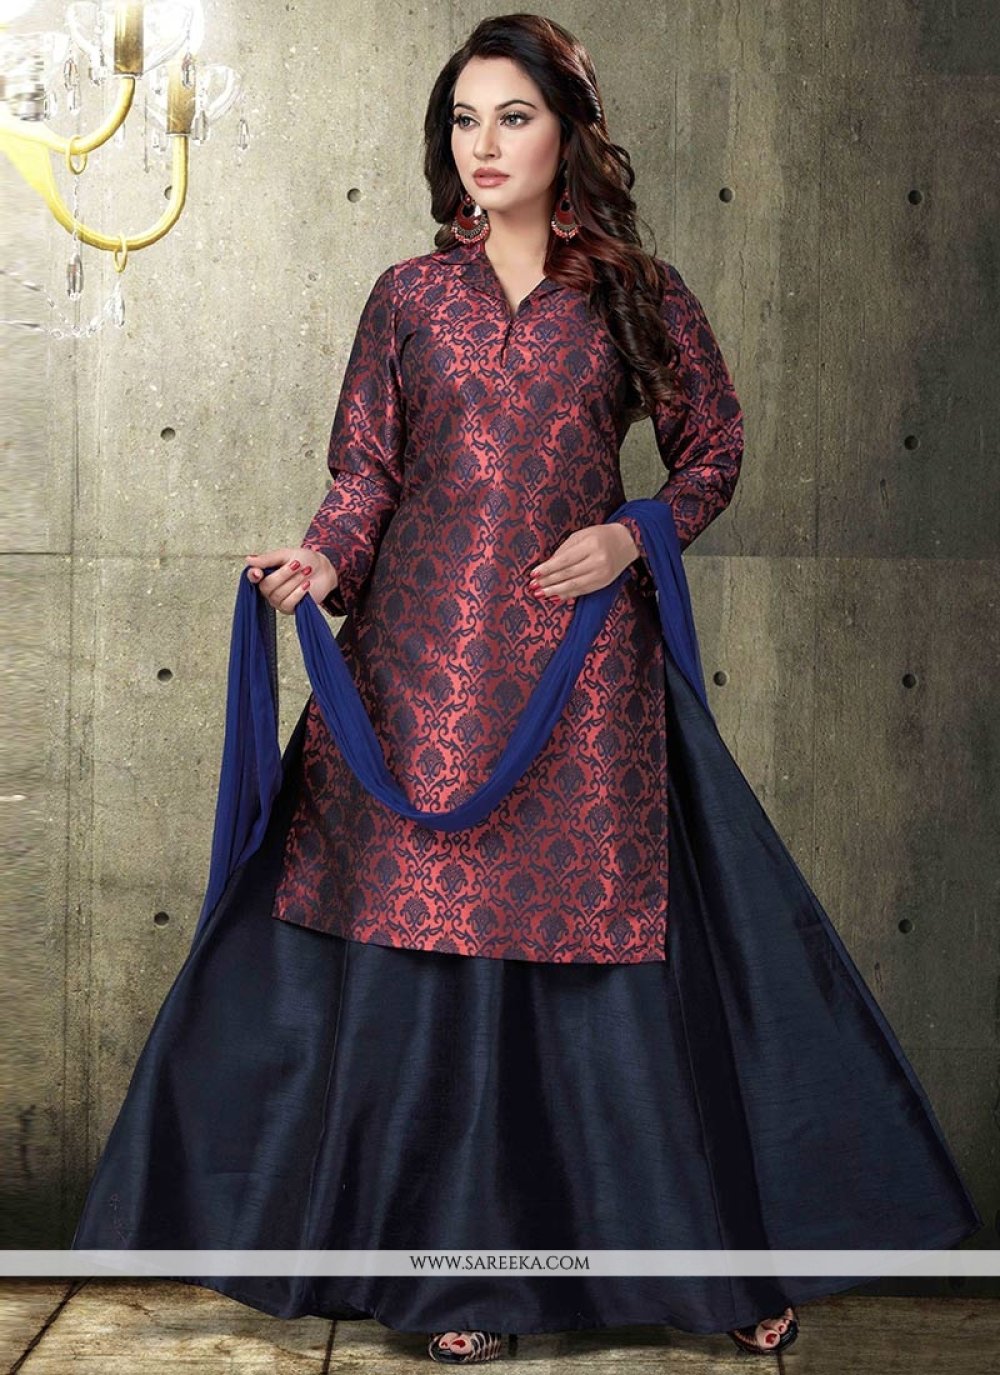 10 Indo-Western Fashion Trends You Should Definitely Try This Diwali |  Velvet dress designs, Indian fashion dresses, Stylish dresses